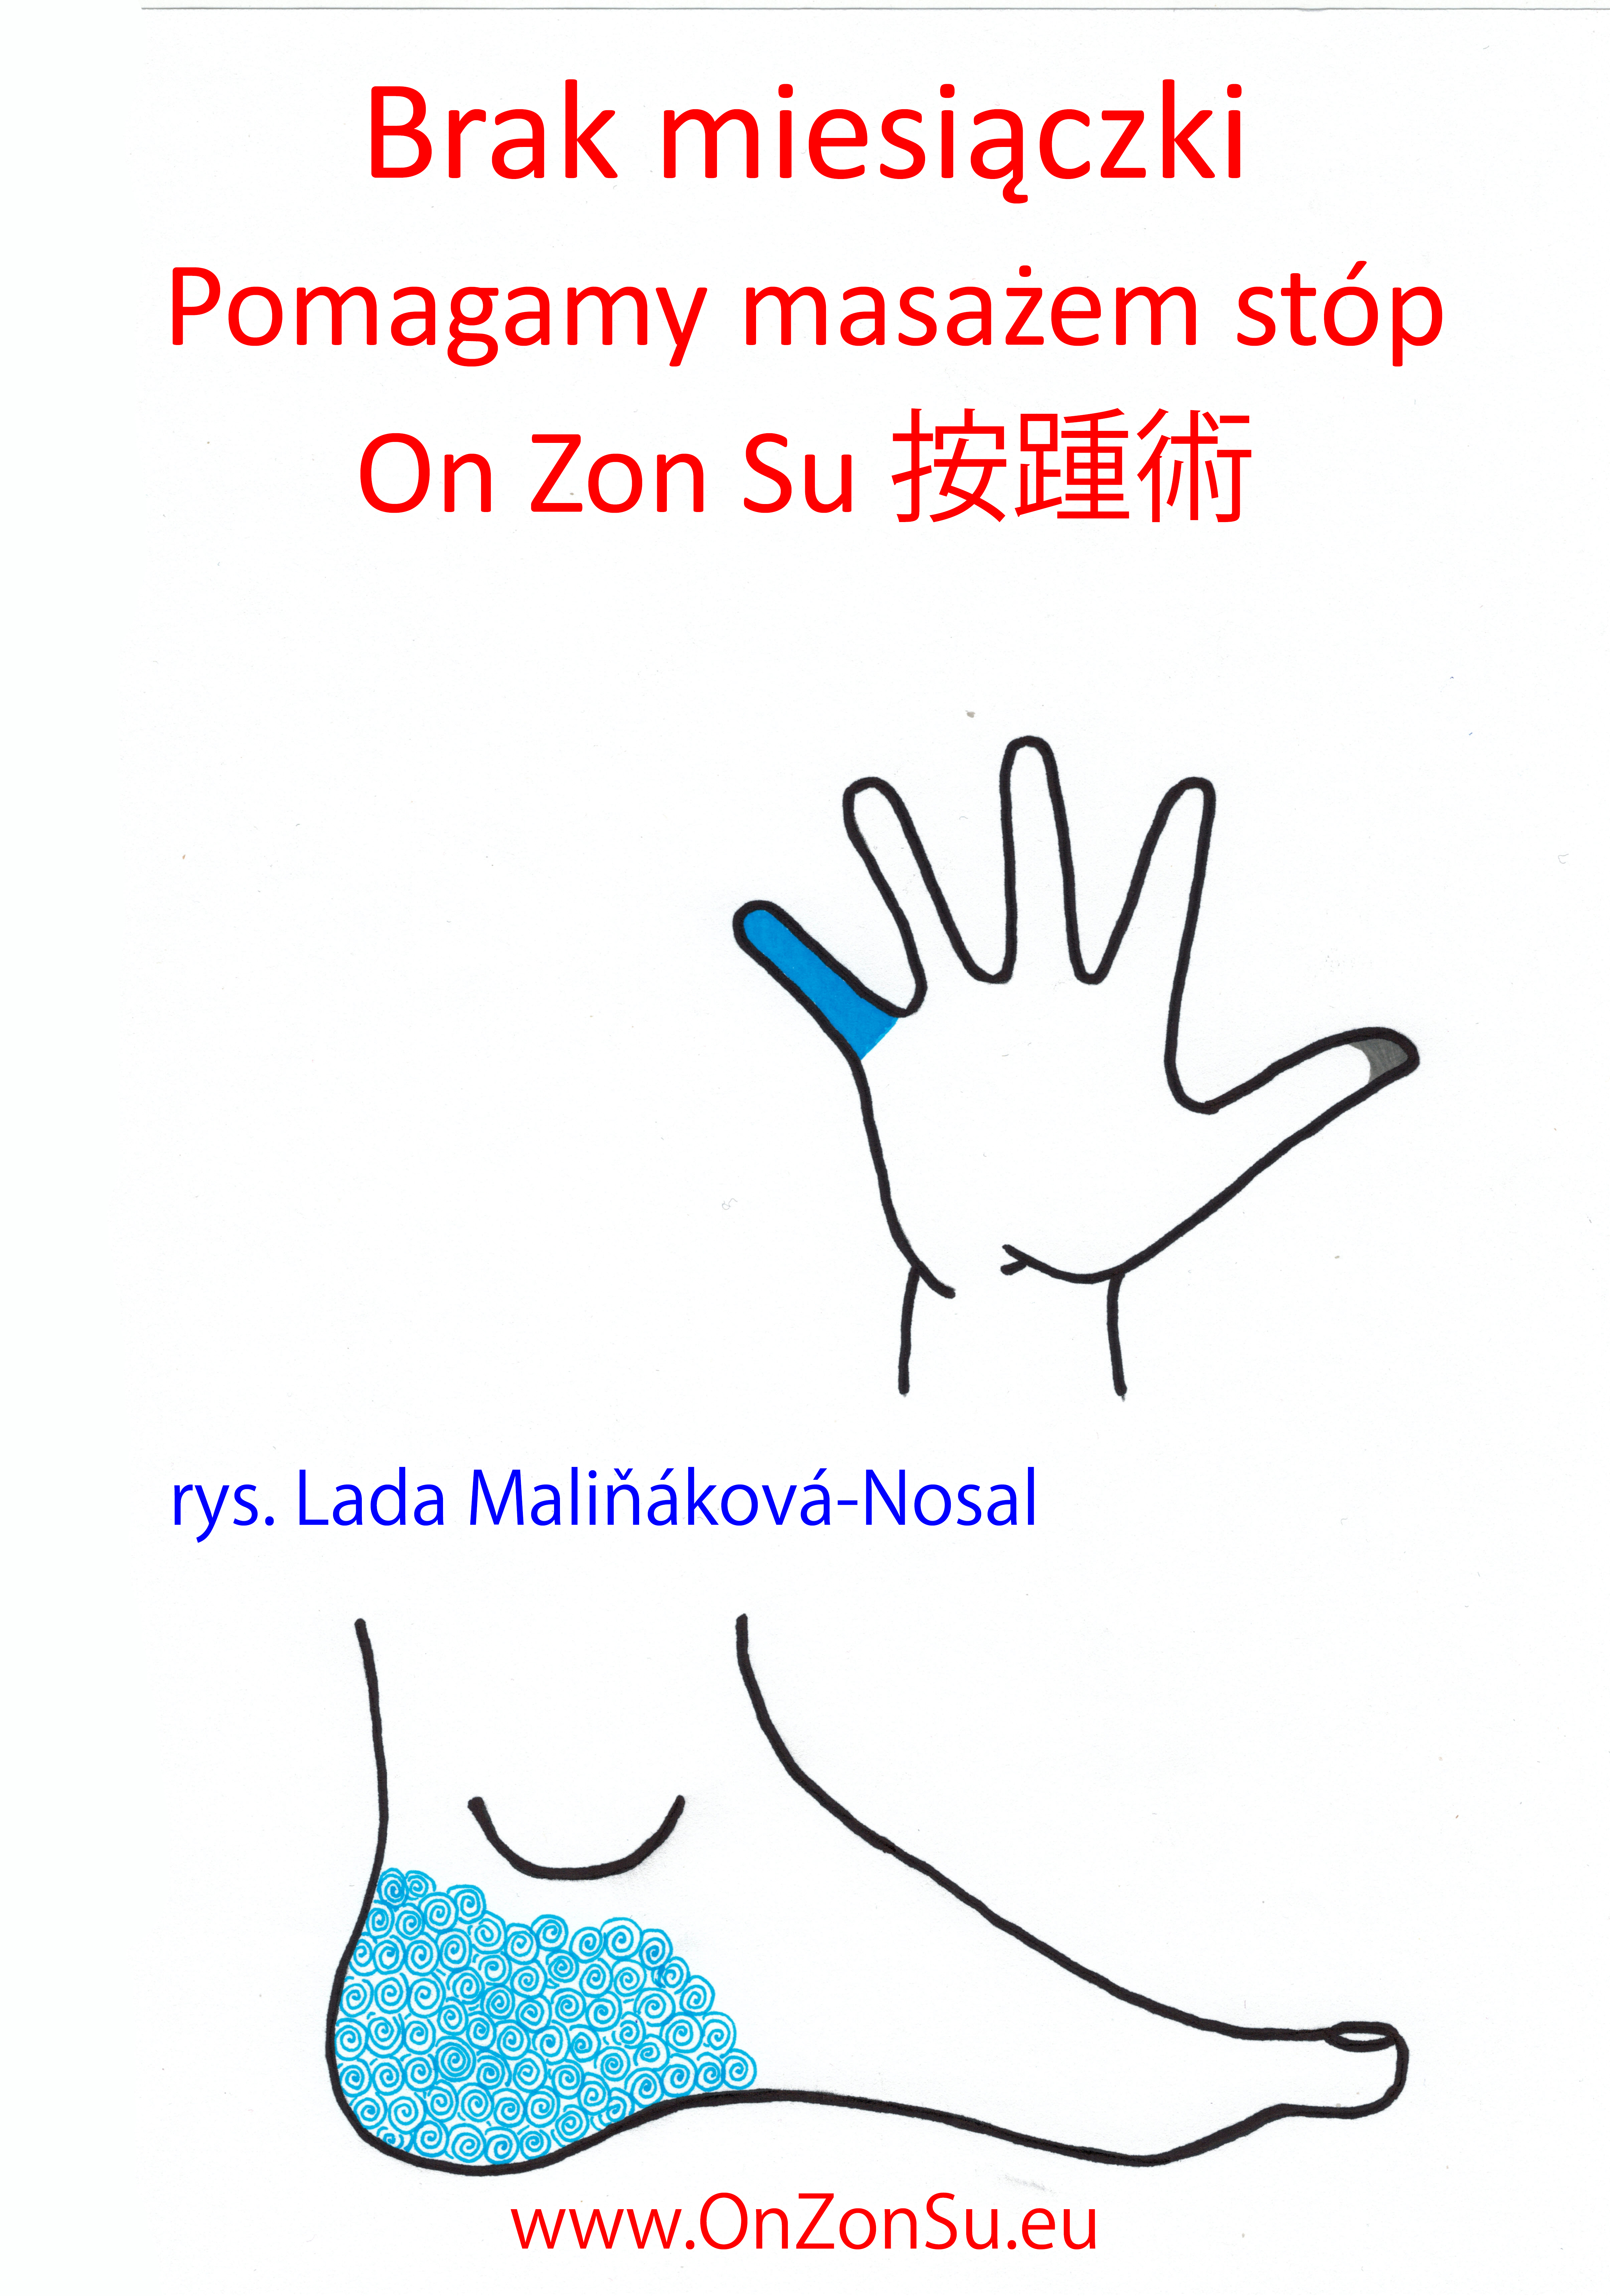 Kurs masażu stóp On Zon Su, Szkolenia refleksologii stóp - Brak miesiączki MEM.jpg